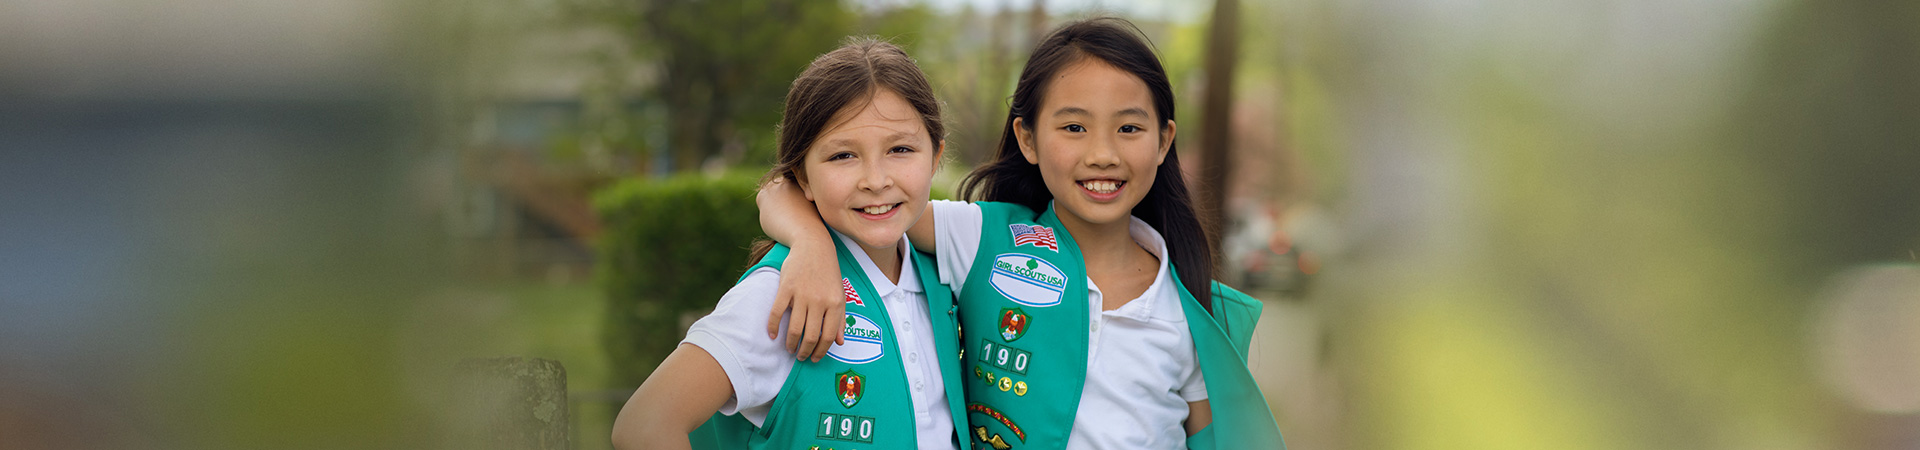  two girl scout juniors outside wearing junior vest uniform smiling 